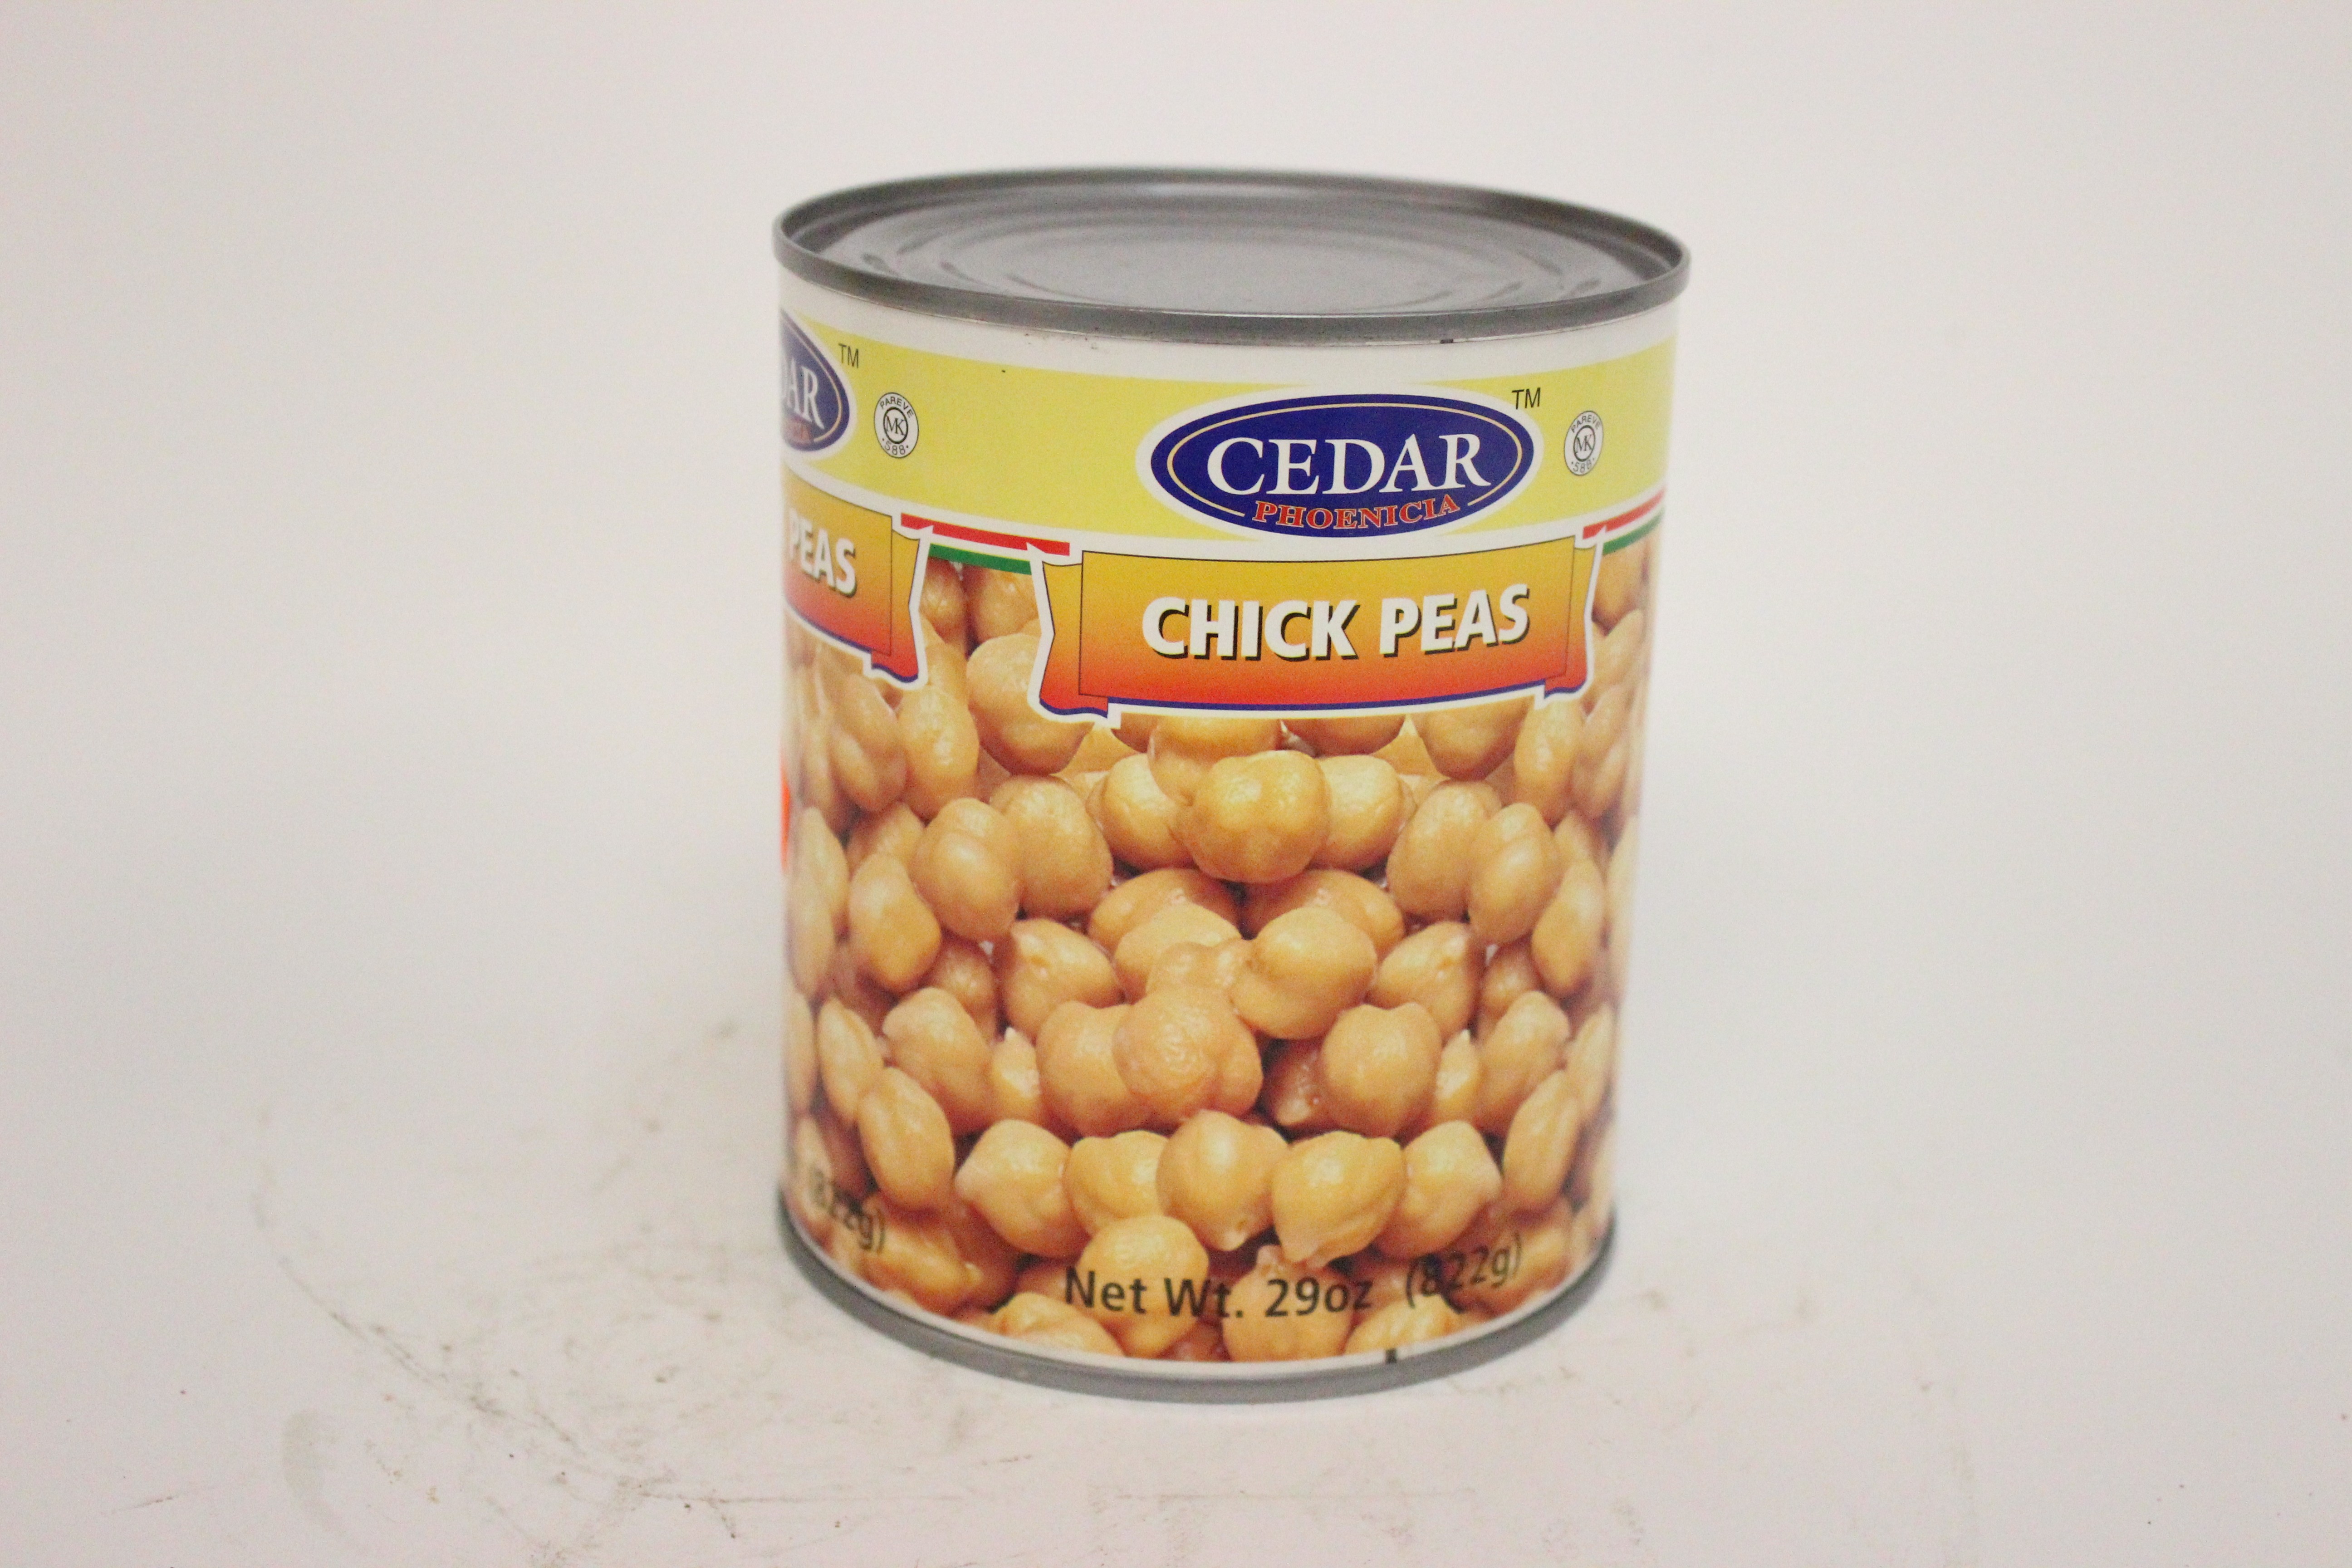 Cedar Chick Peas 29 oz